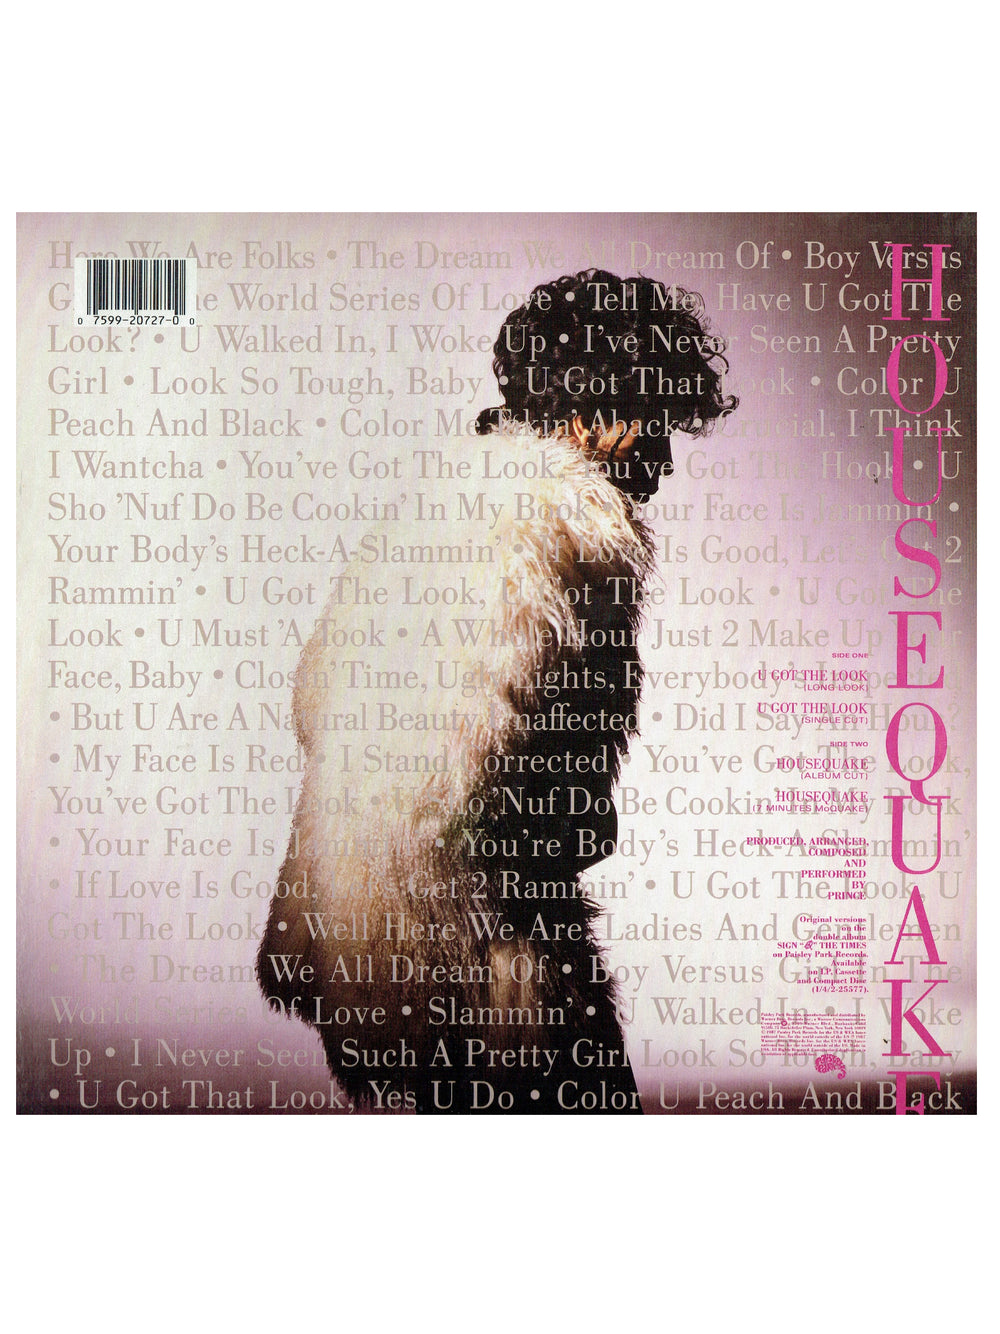 Prince U Got The Look / Housequake 12 inch Maxi Single Vinyl USA Release